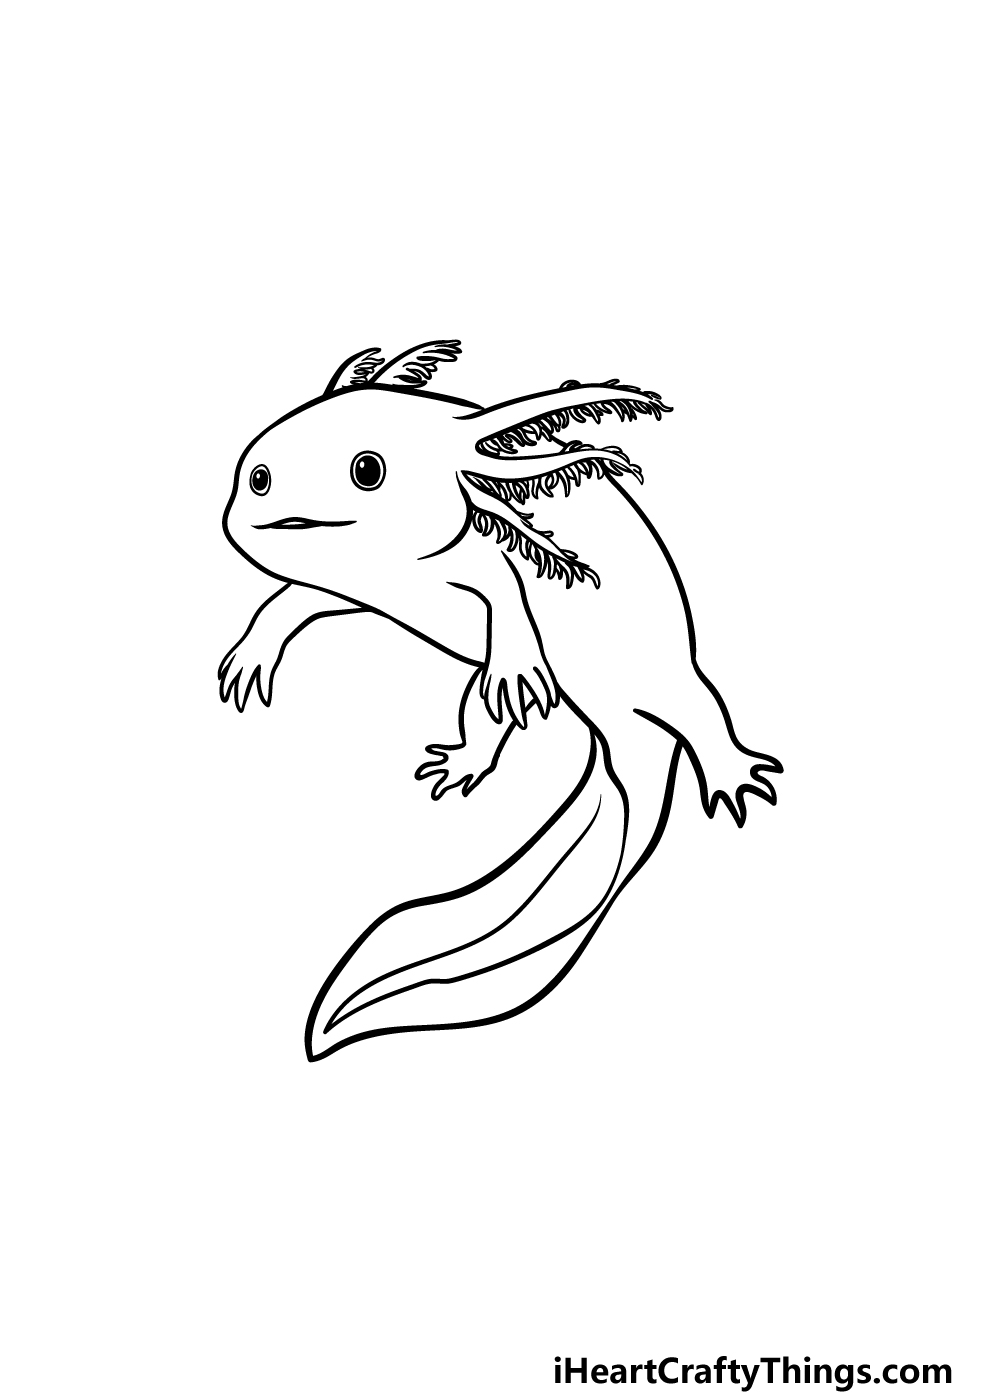 Draw Axolotl step 5